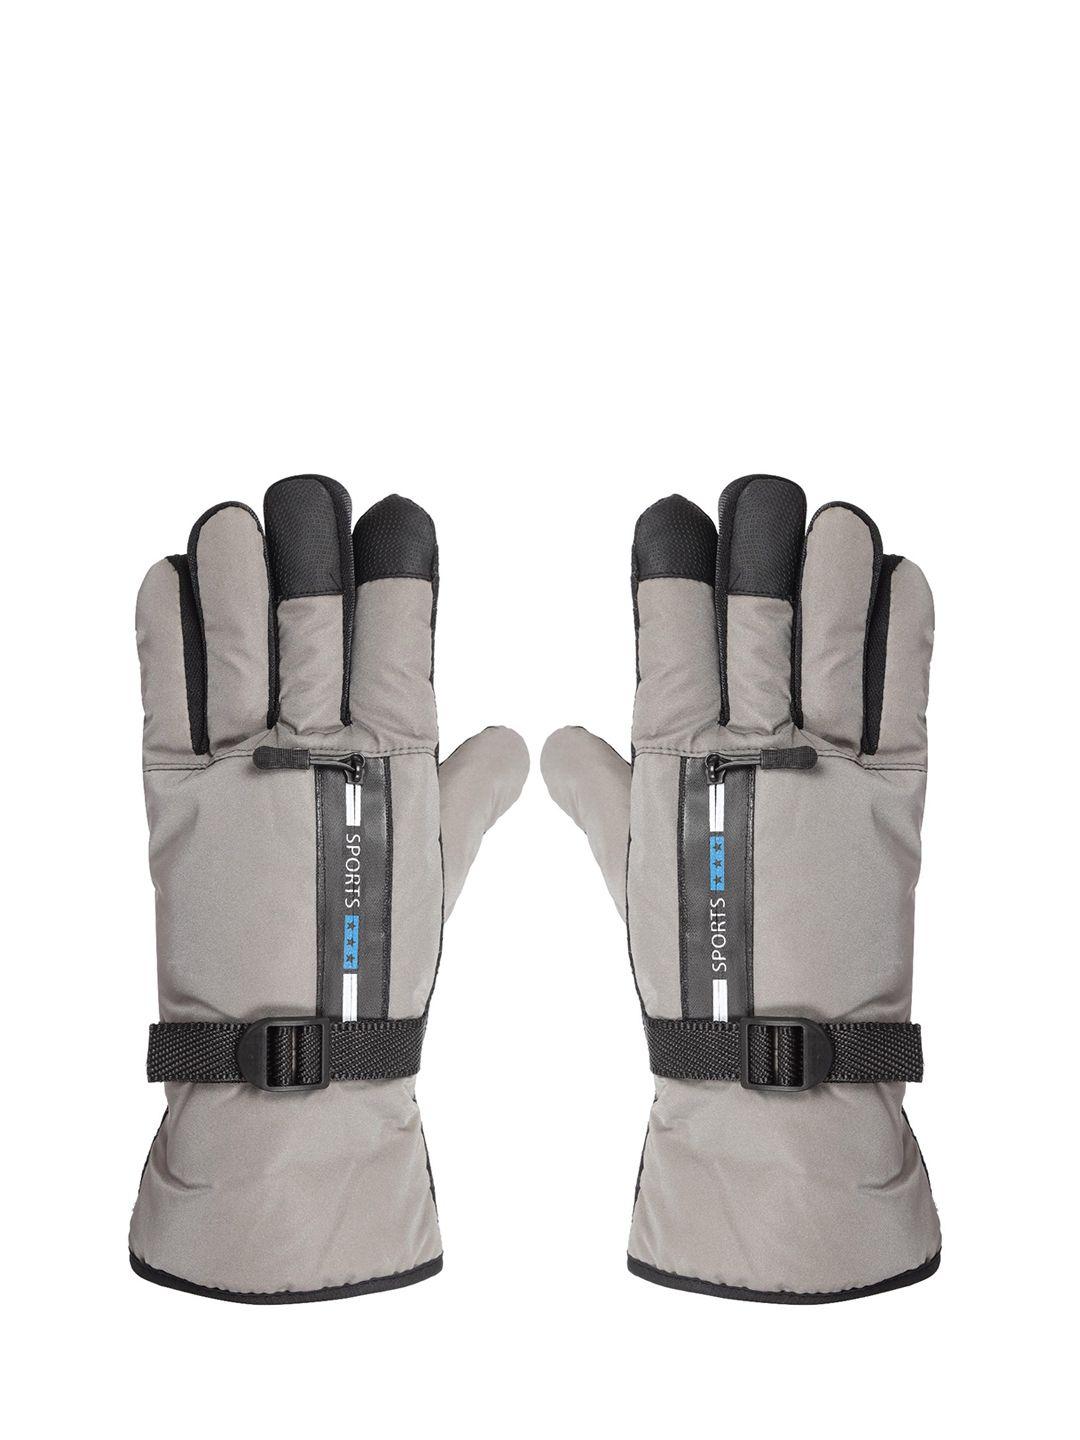 fabseasons grey colourblocked winter gloves